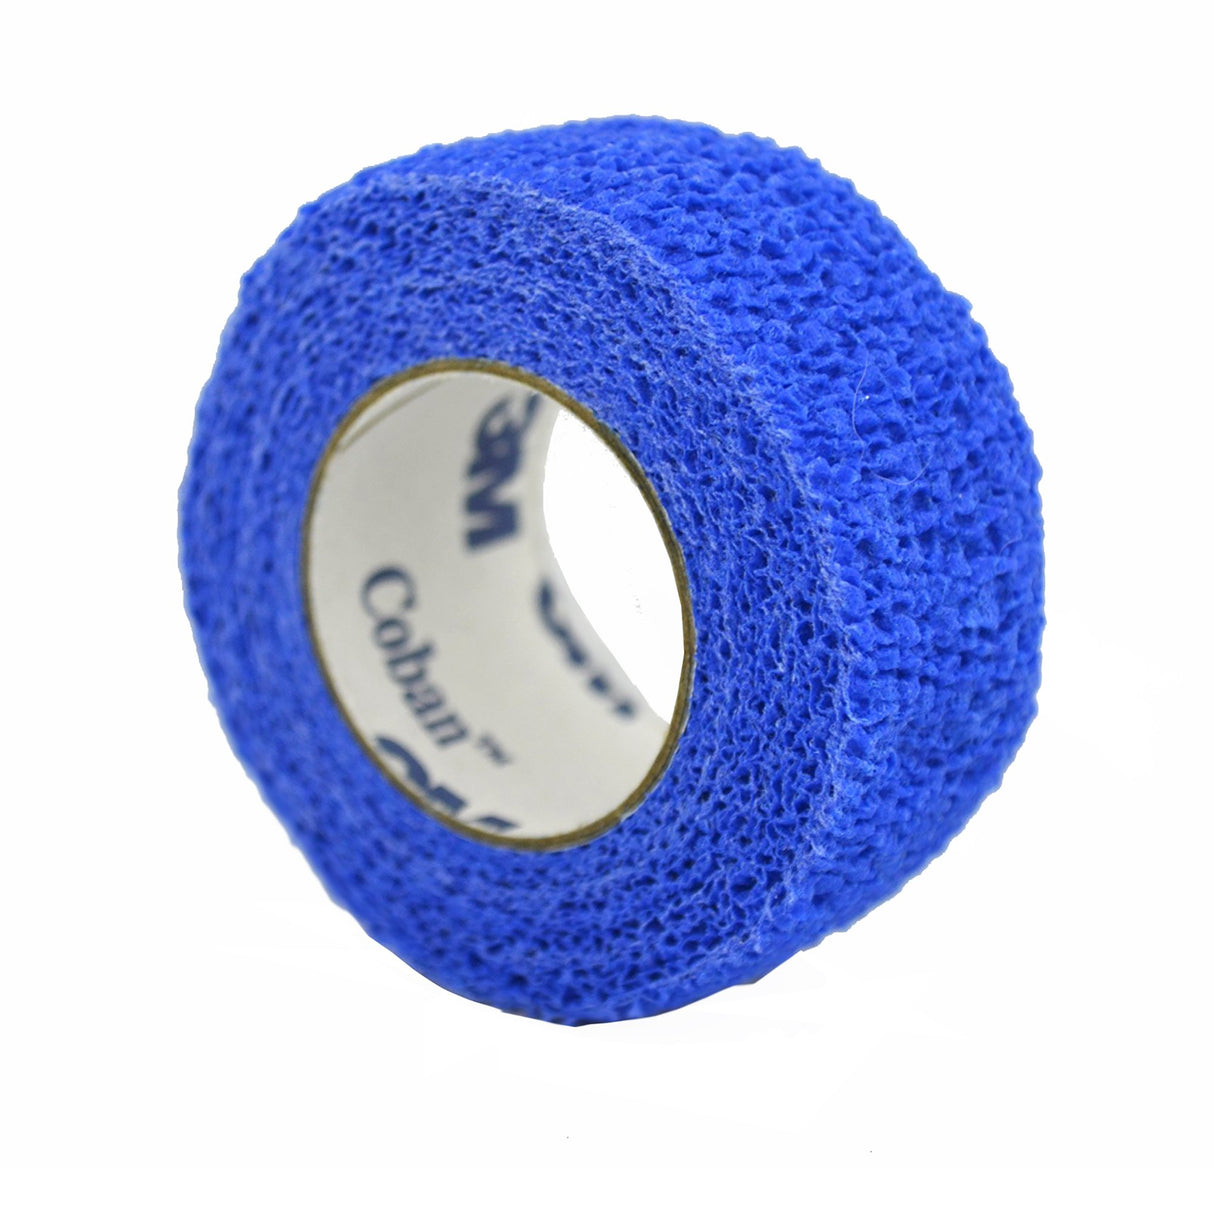 3M™ Coban™ Self-adherent Closure Cohesive Bandage, 2 Inch x 5 Yard, Blue